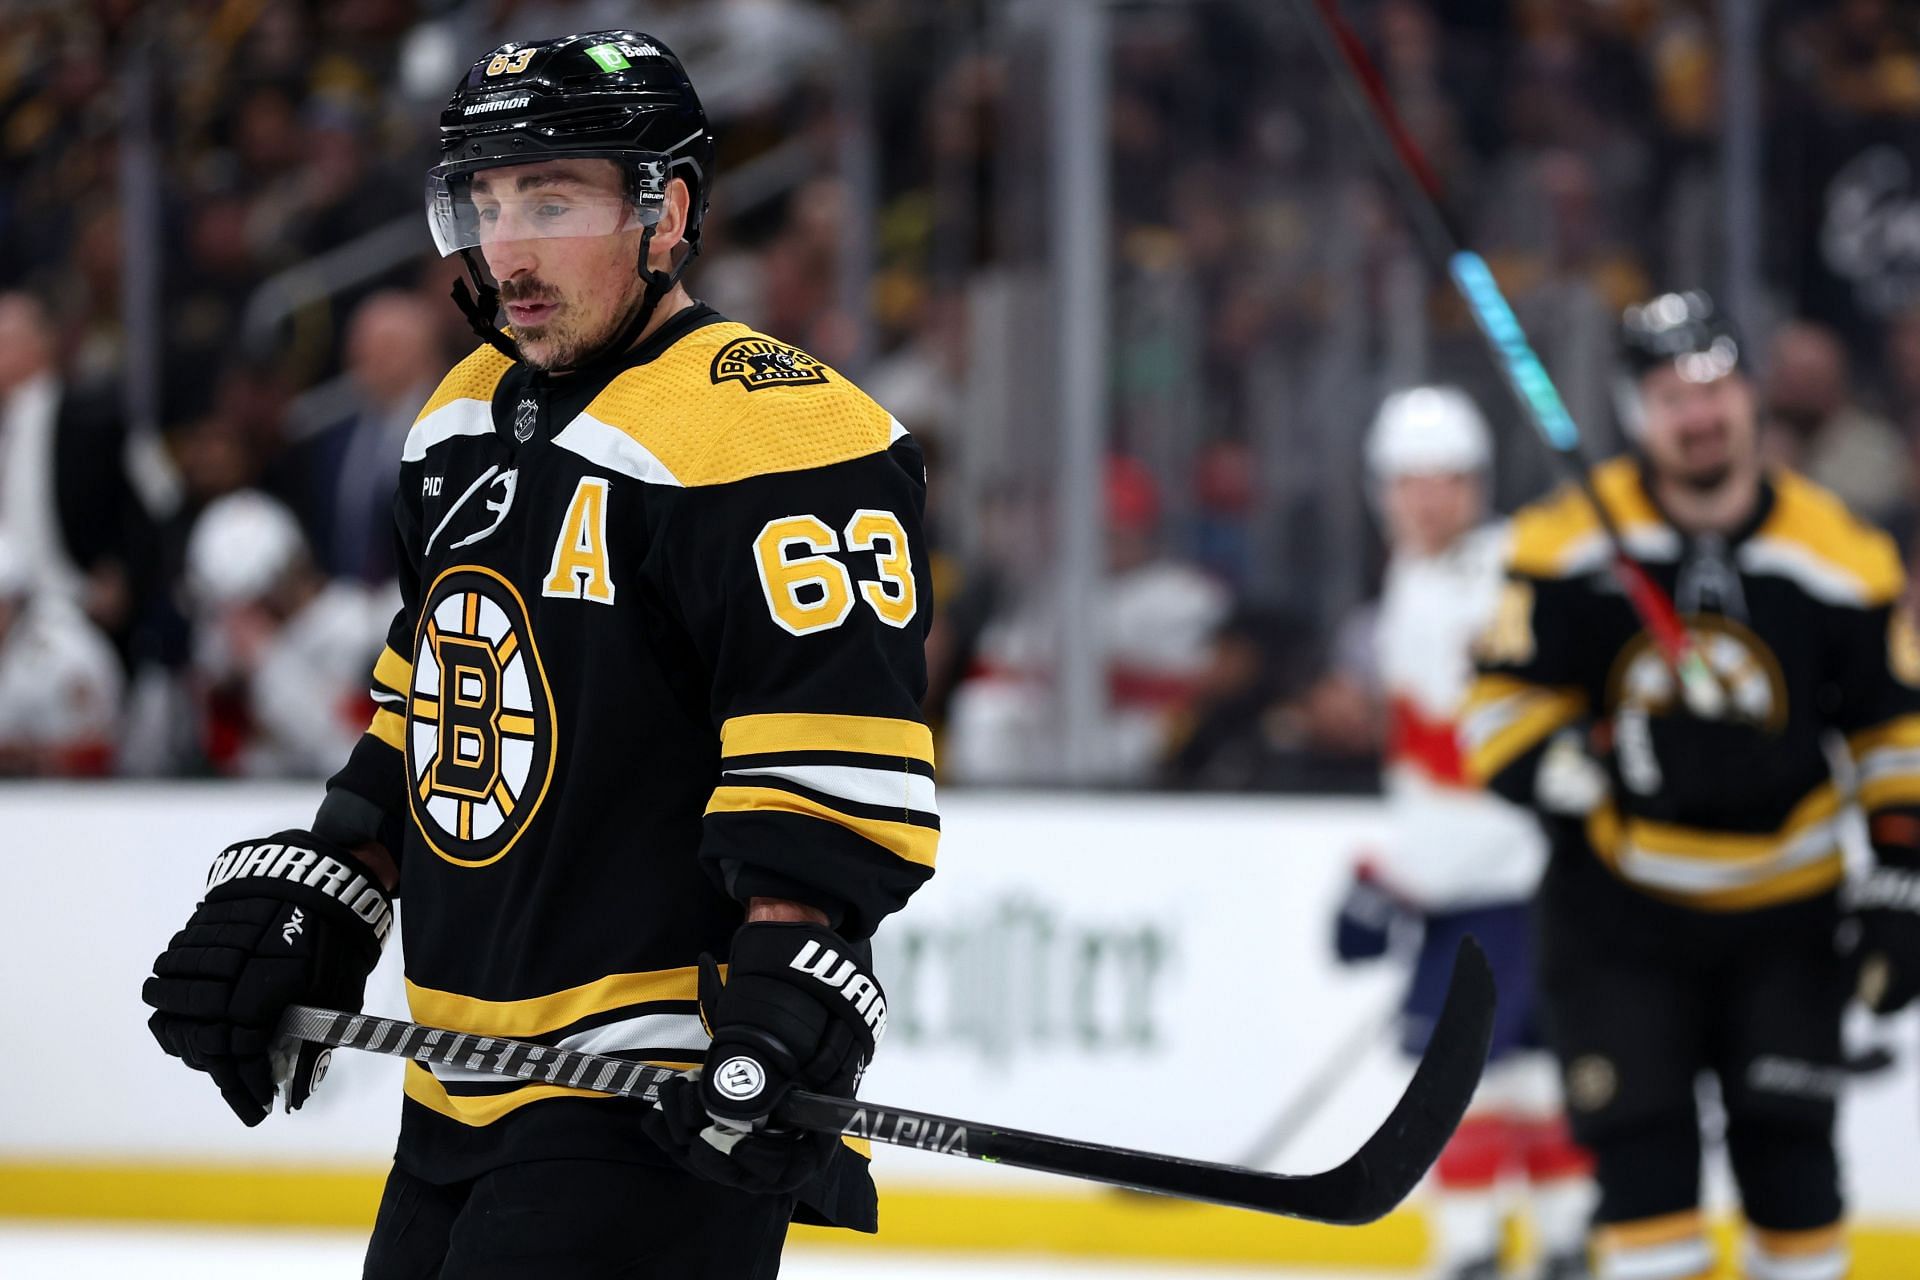 Photos: Brad Marchand Named Bruins Captain